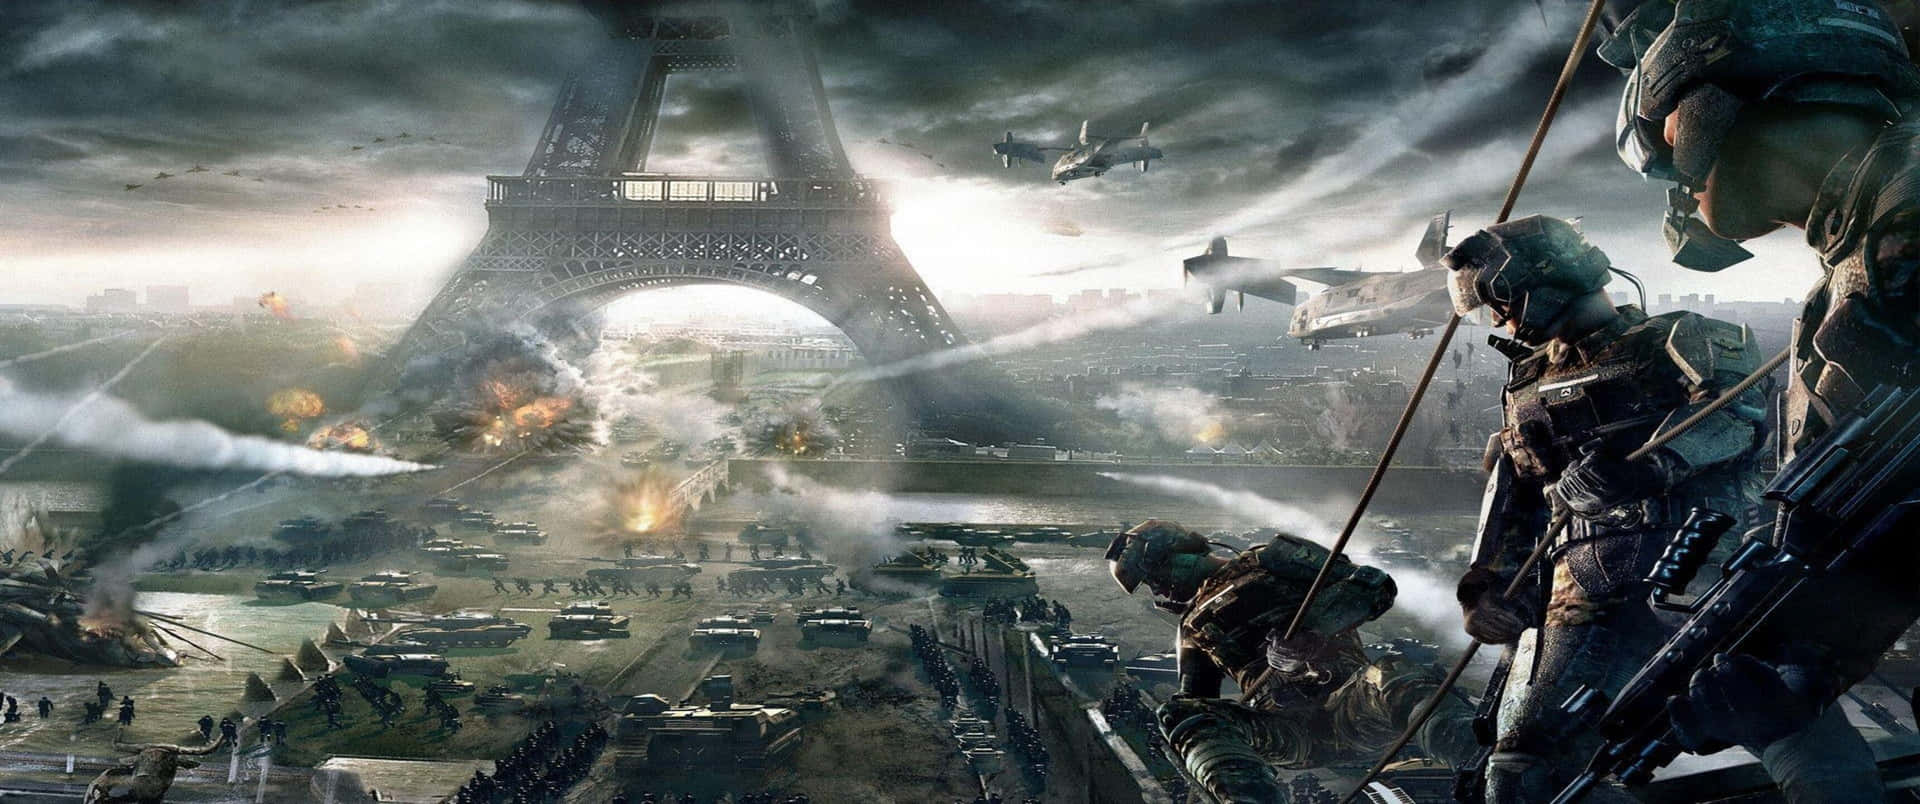 Eiffeltornetscene 3440x1440p Call Of Duty Modern Warfare Bakgrund.